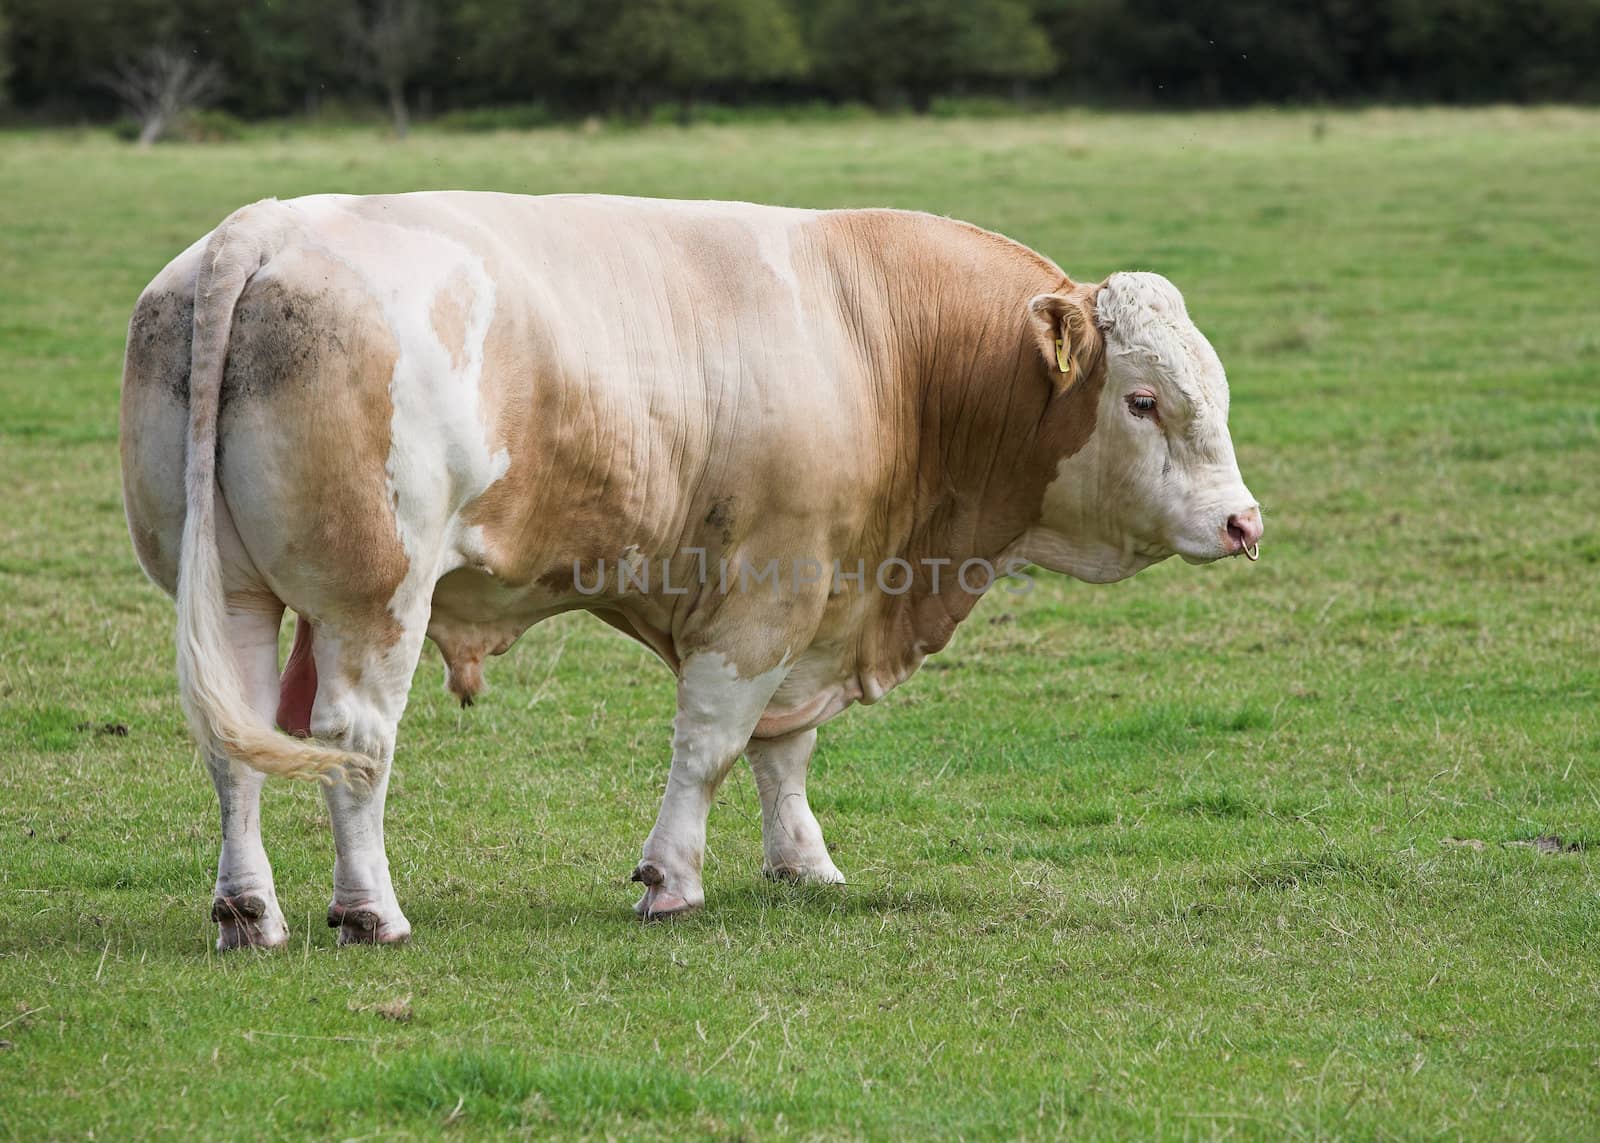 Bull standing in a Field by grandaded